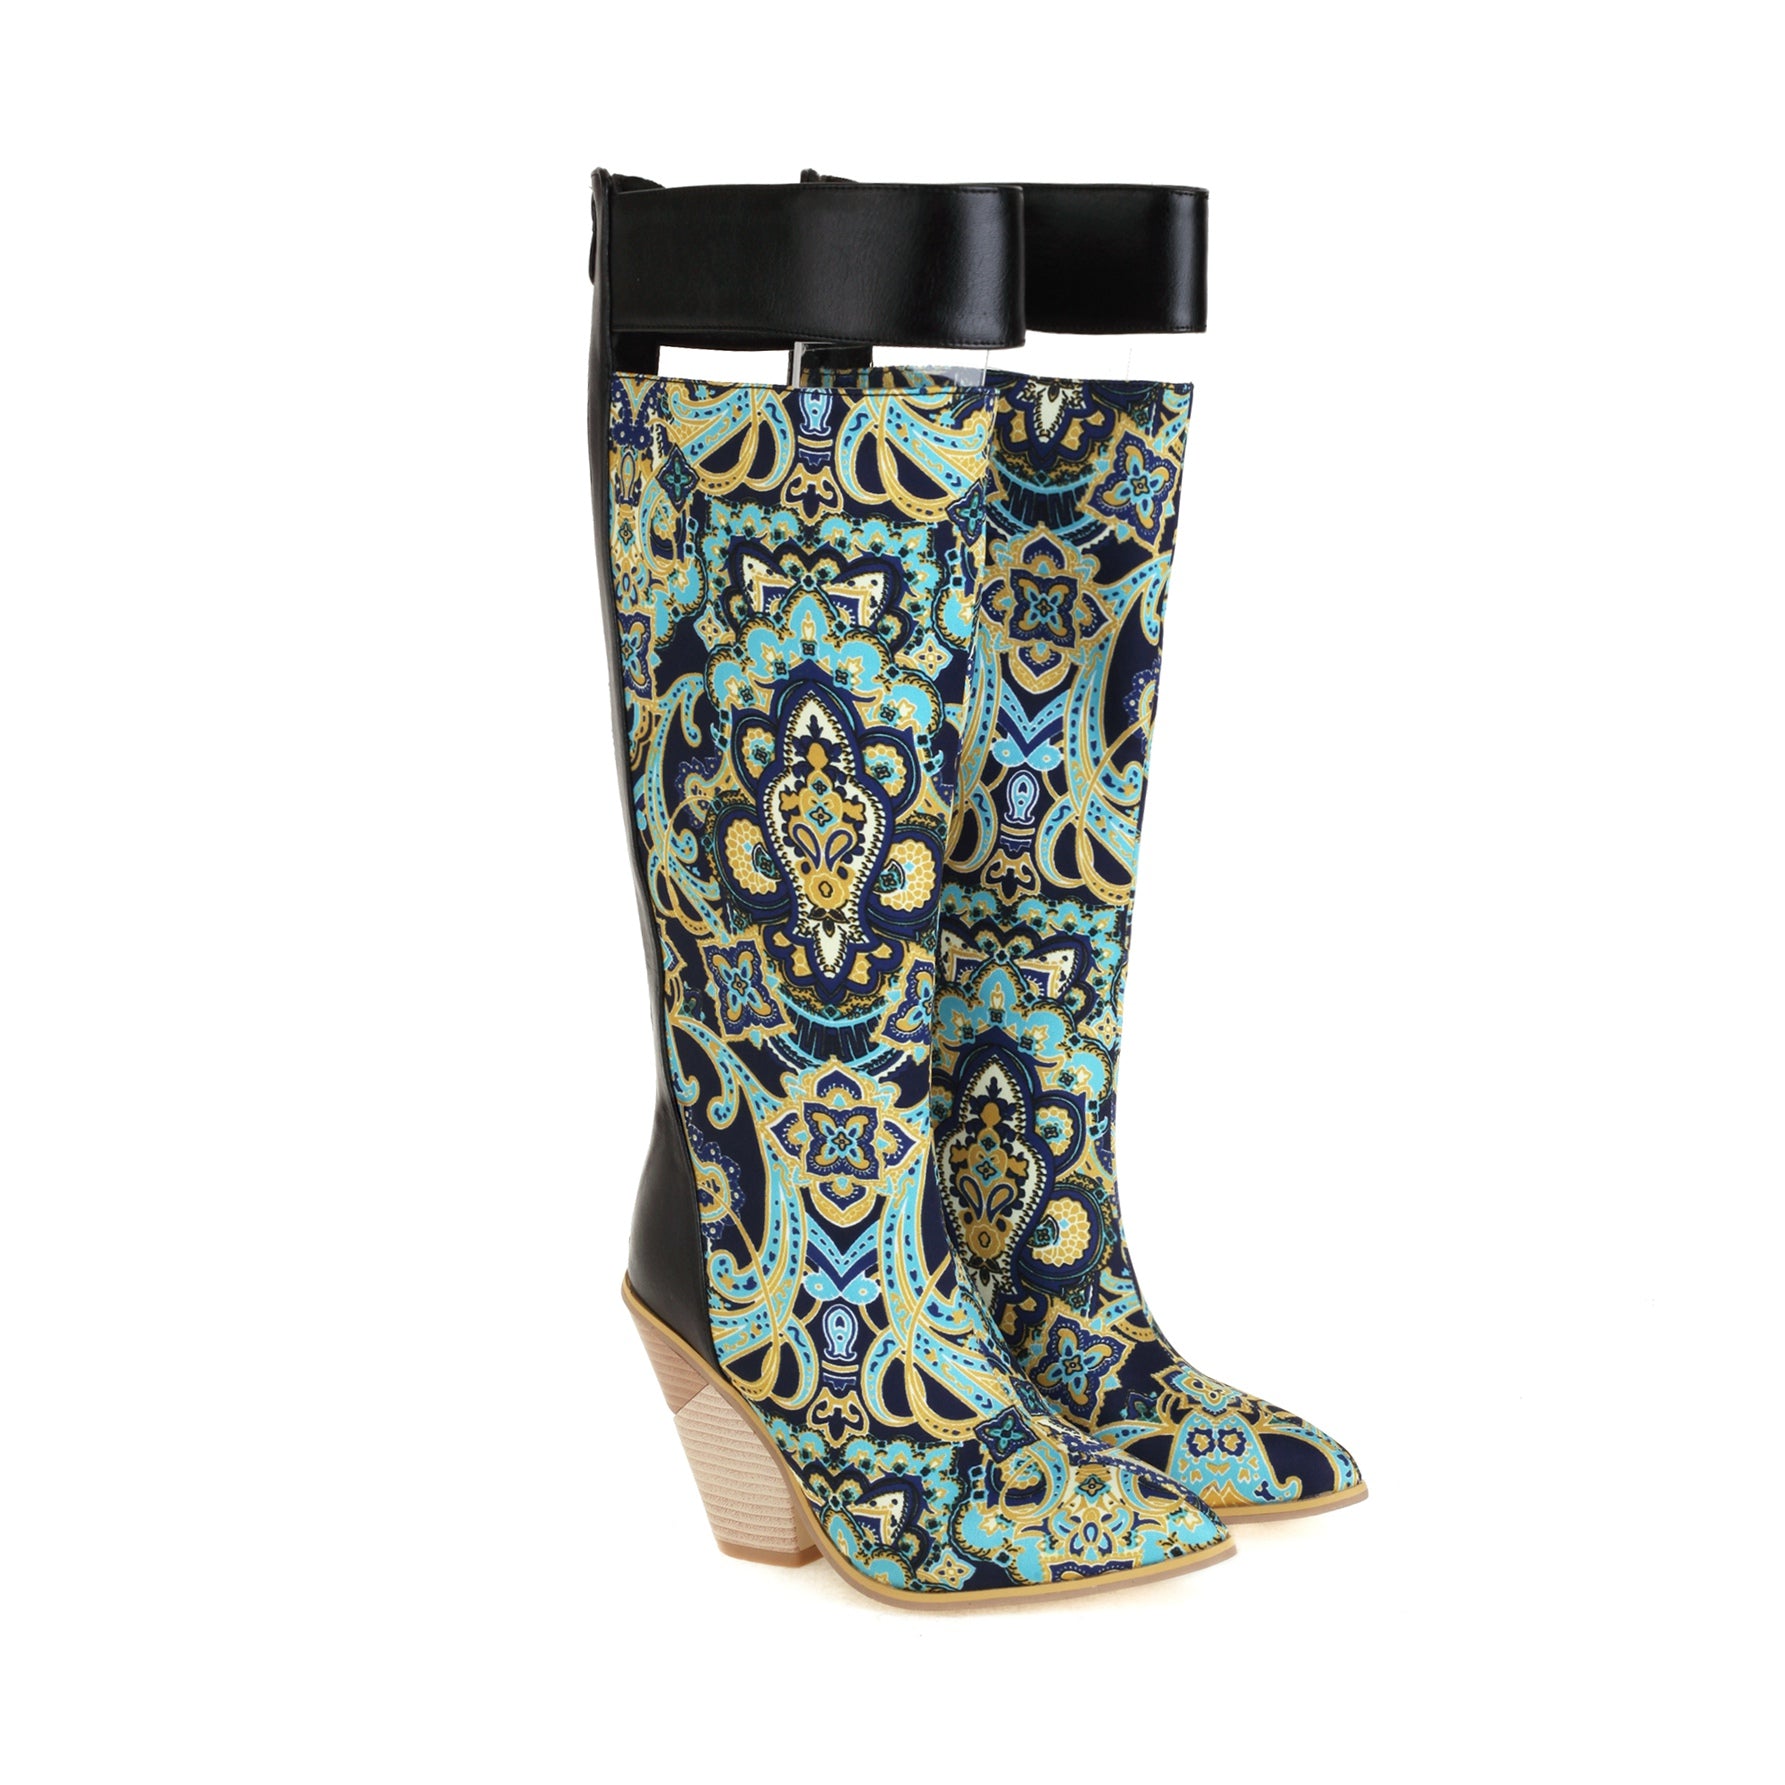 Bigsizeheels American folk wooden heel boots - Green freeshipping - bigsizeheel®-size5-size15 -All Plus Sizes Available!